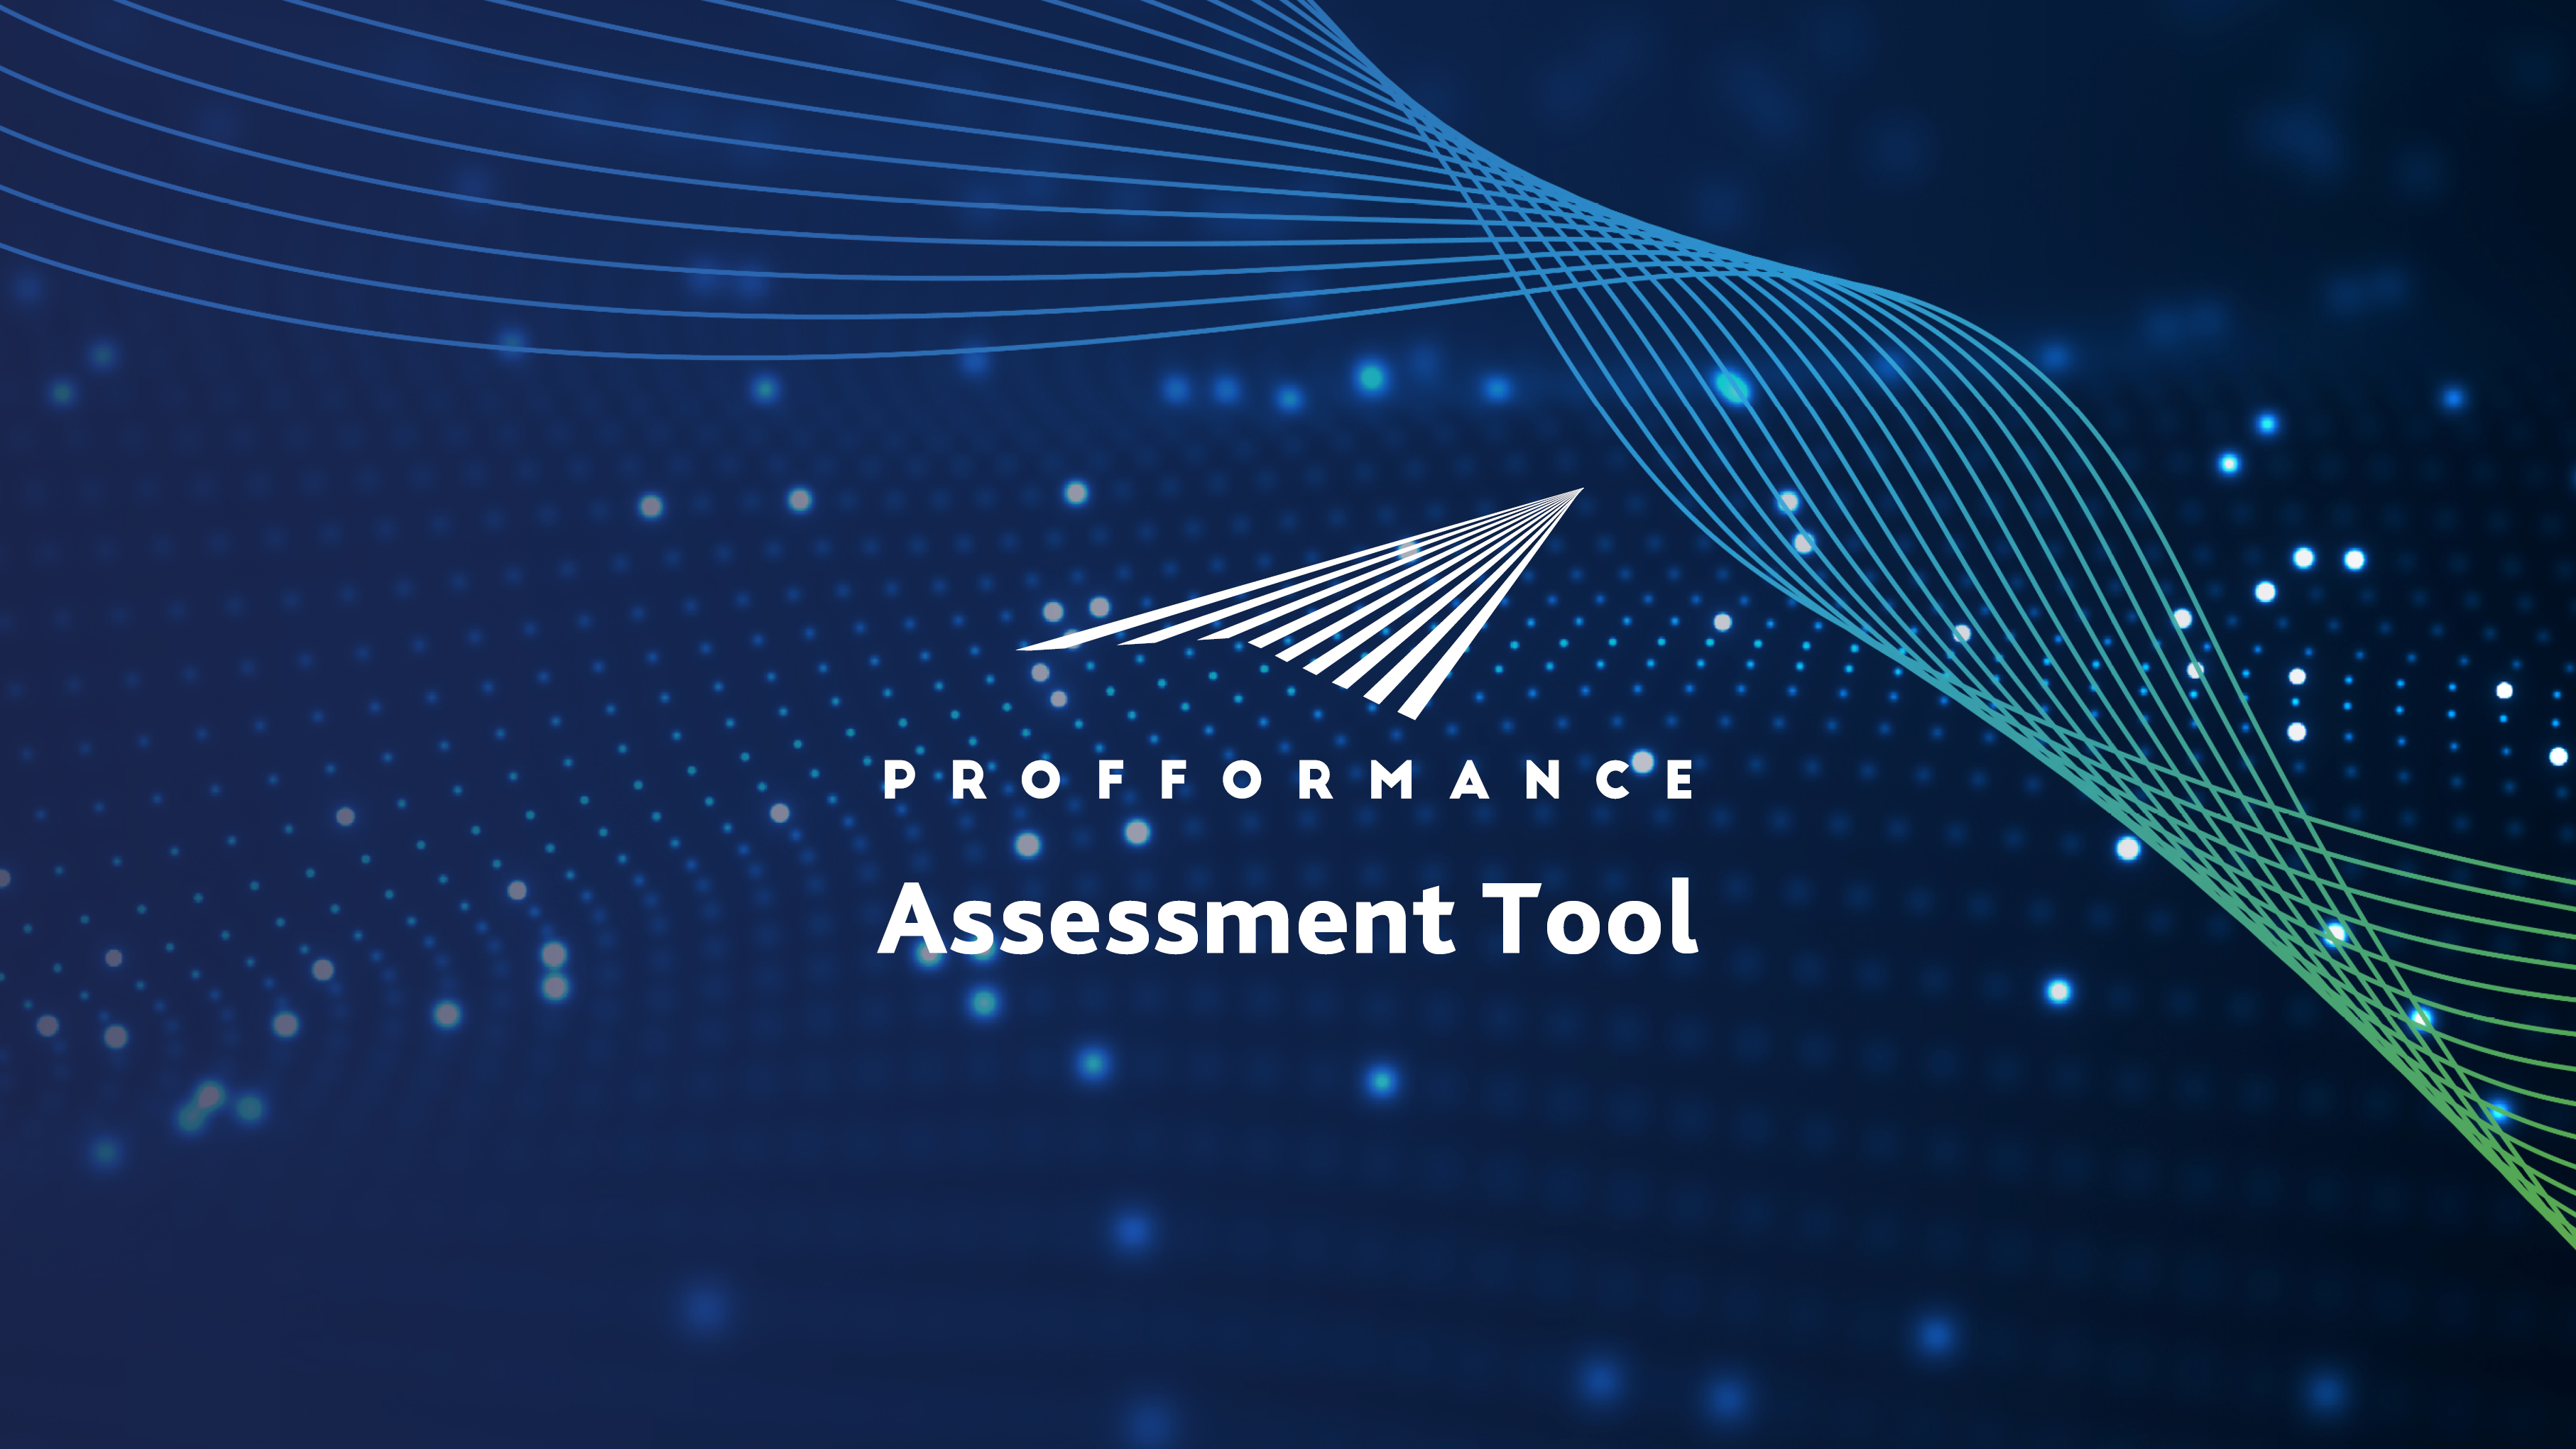 profformance-assesement-tool-honlap-promo-4-3-1280x720.jpg